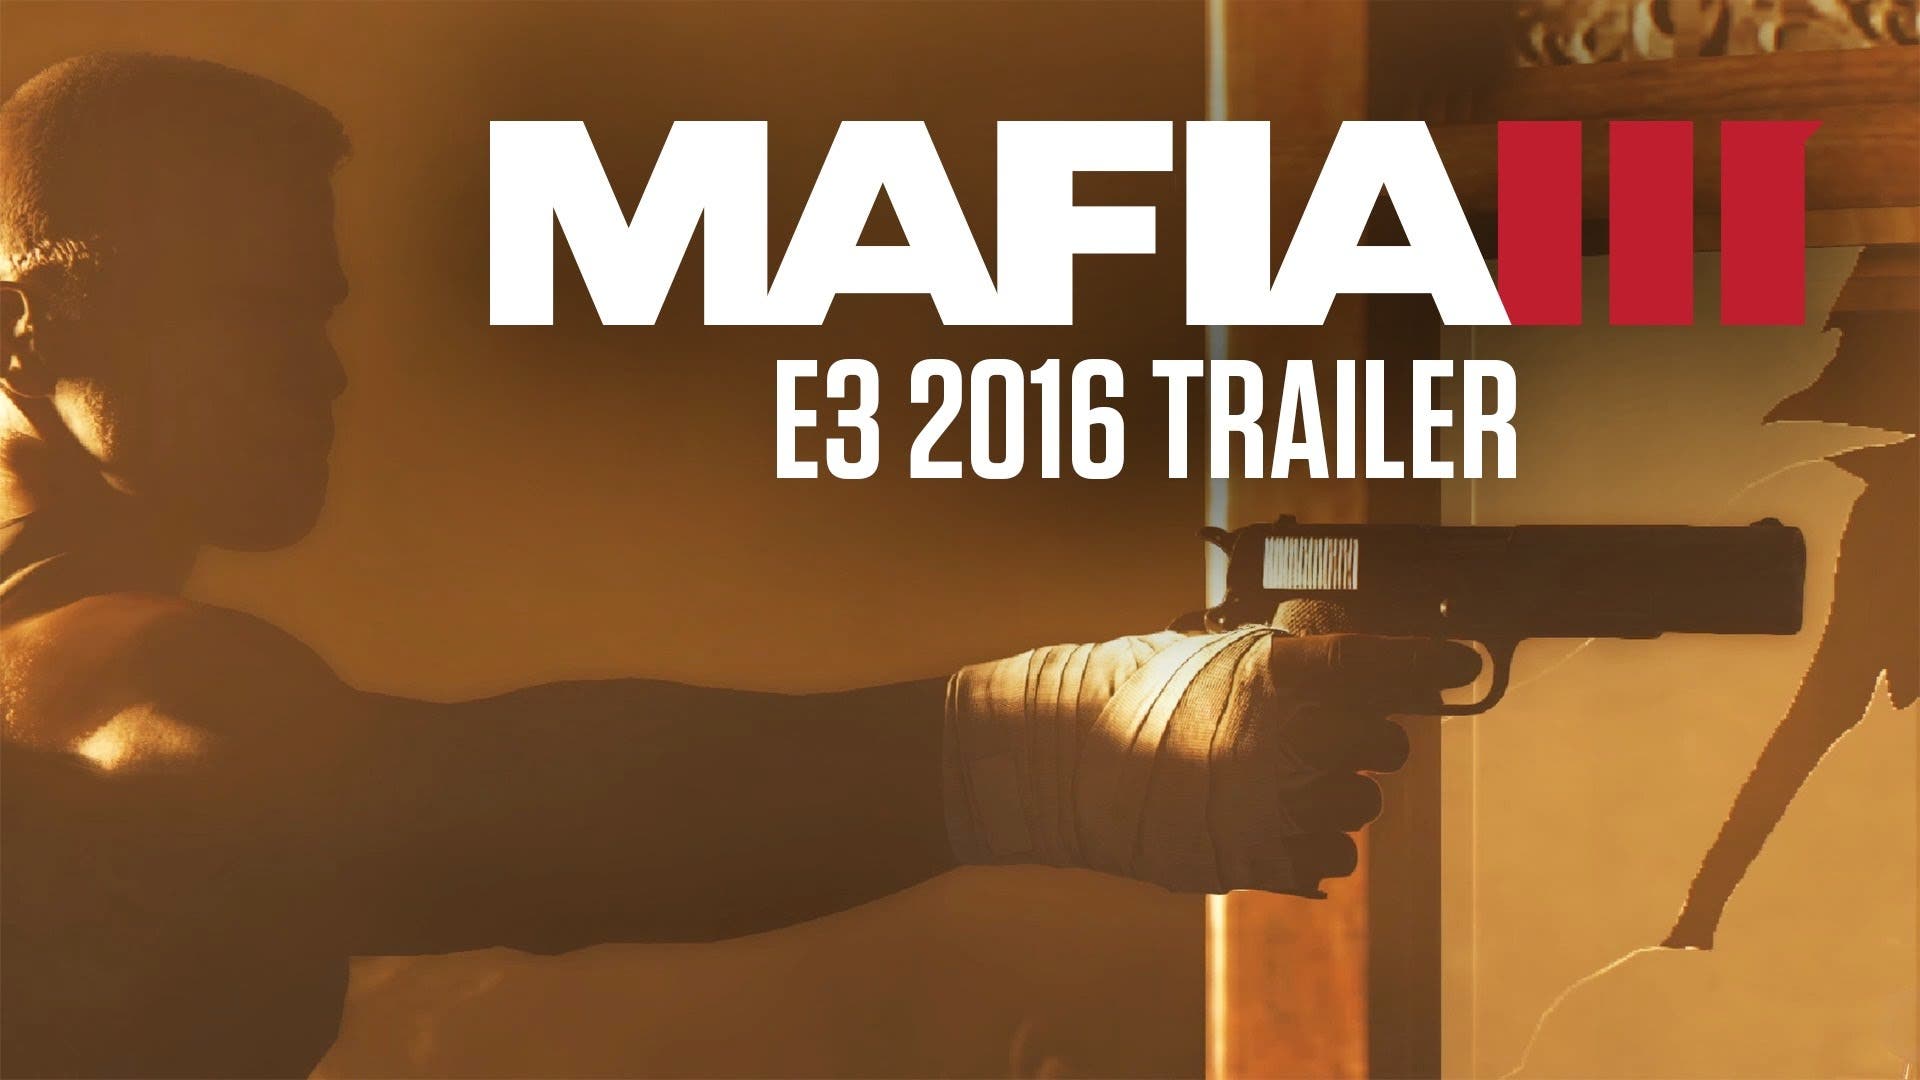 e3 2016 mafia iii trailer shows